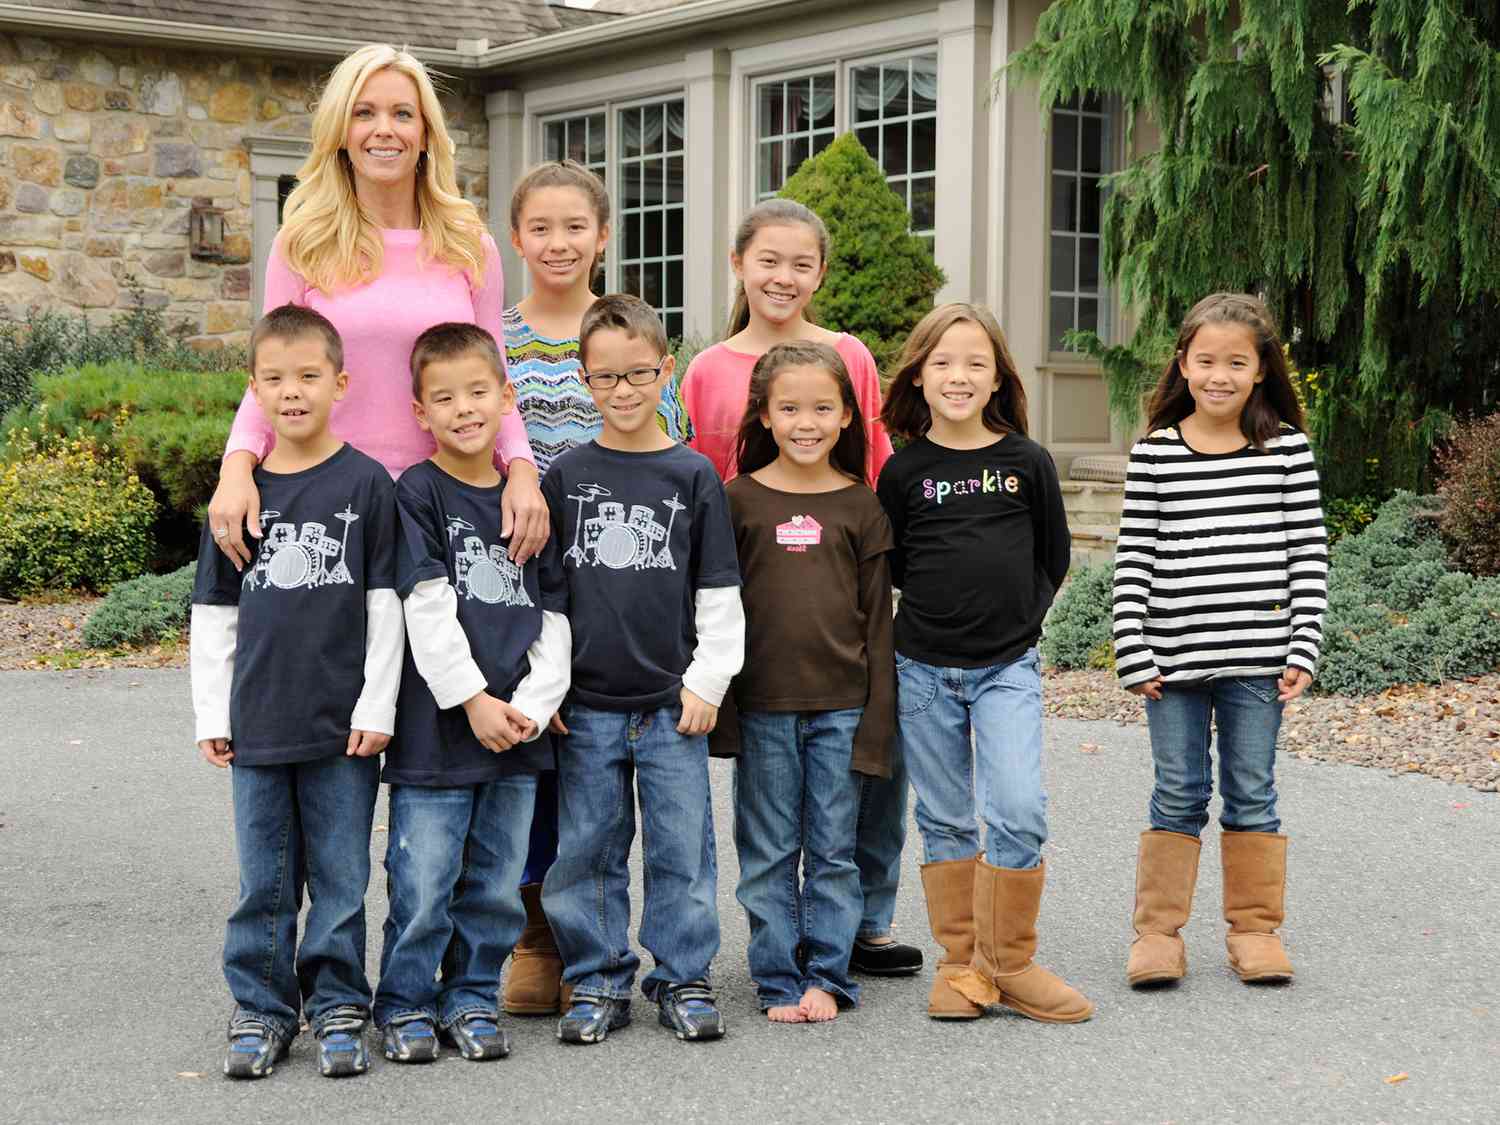 Jon Gosselin's now-former wife, Kate Gosselin, with their eight children